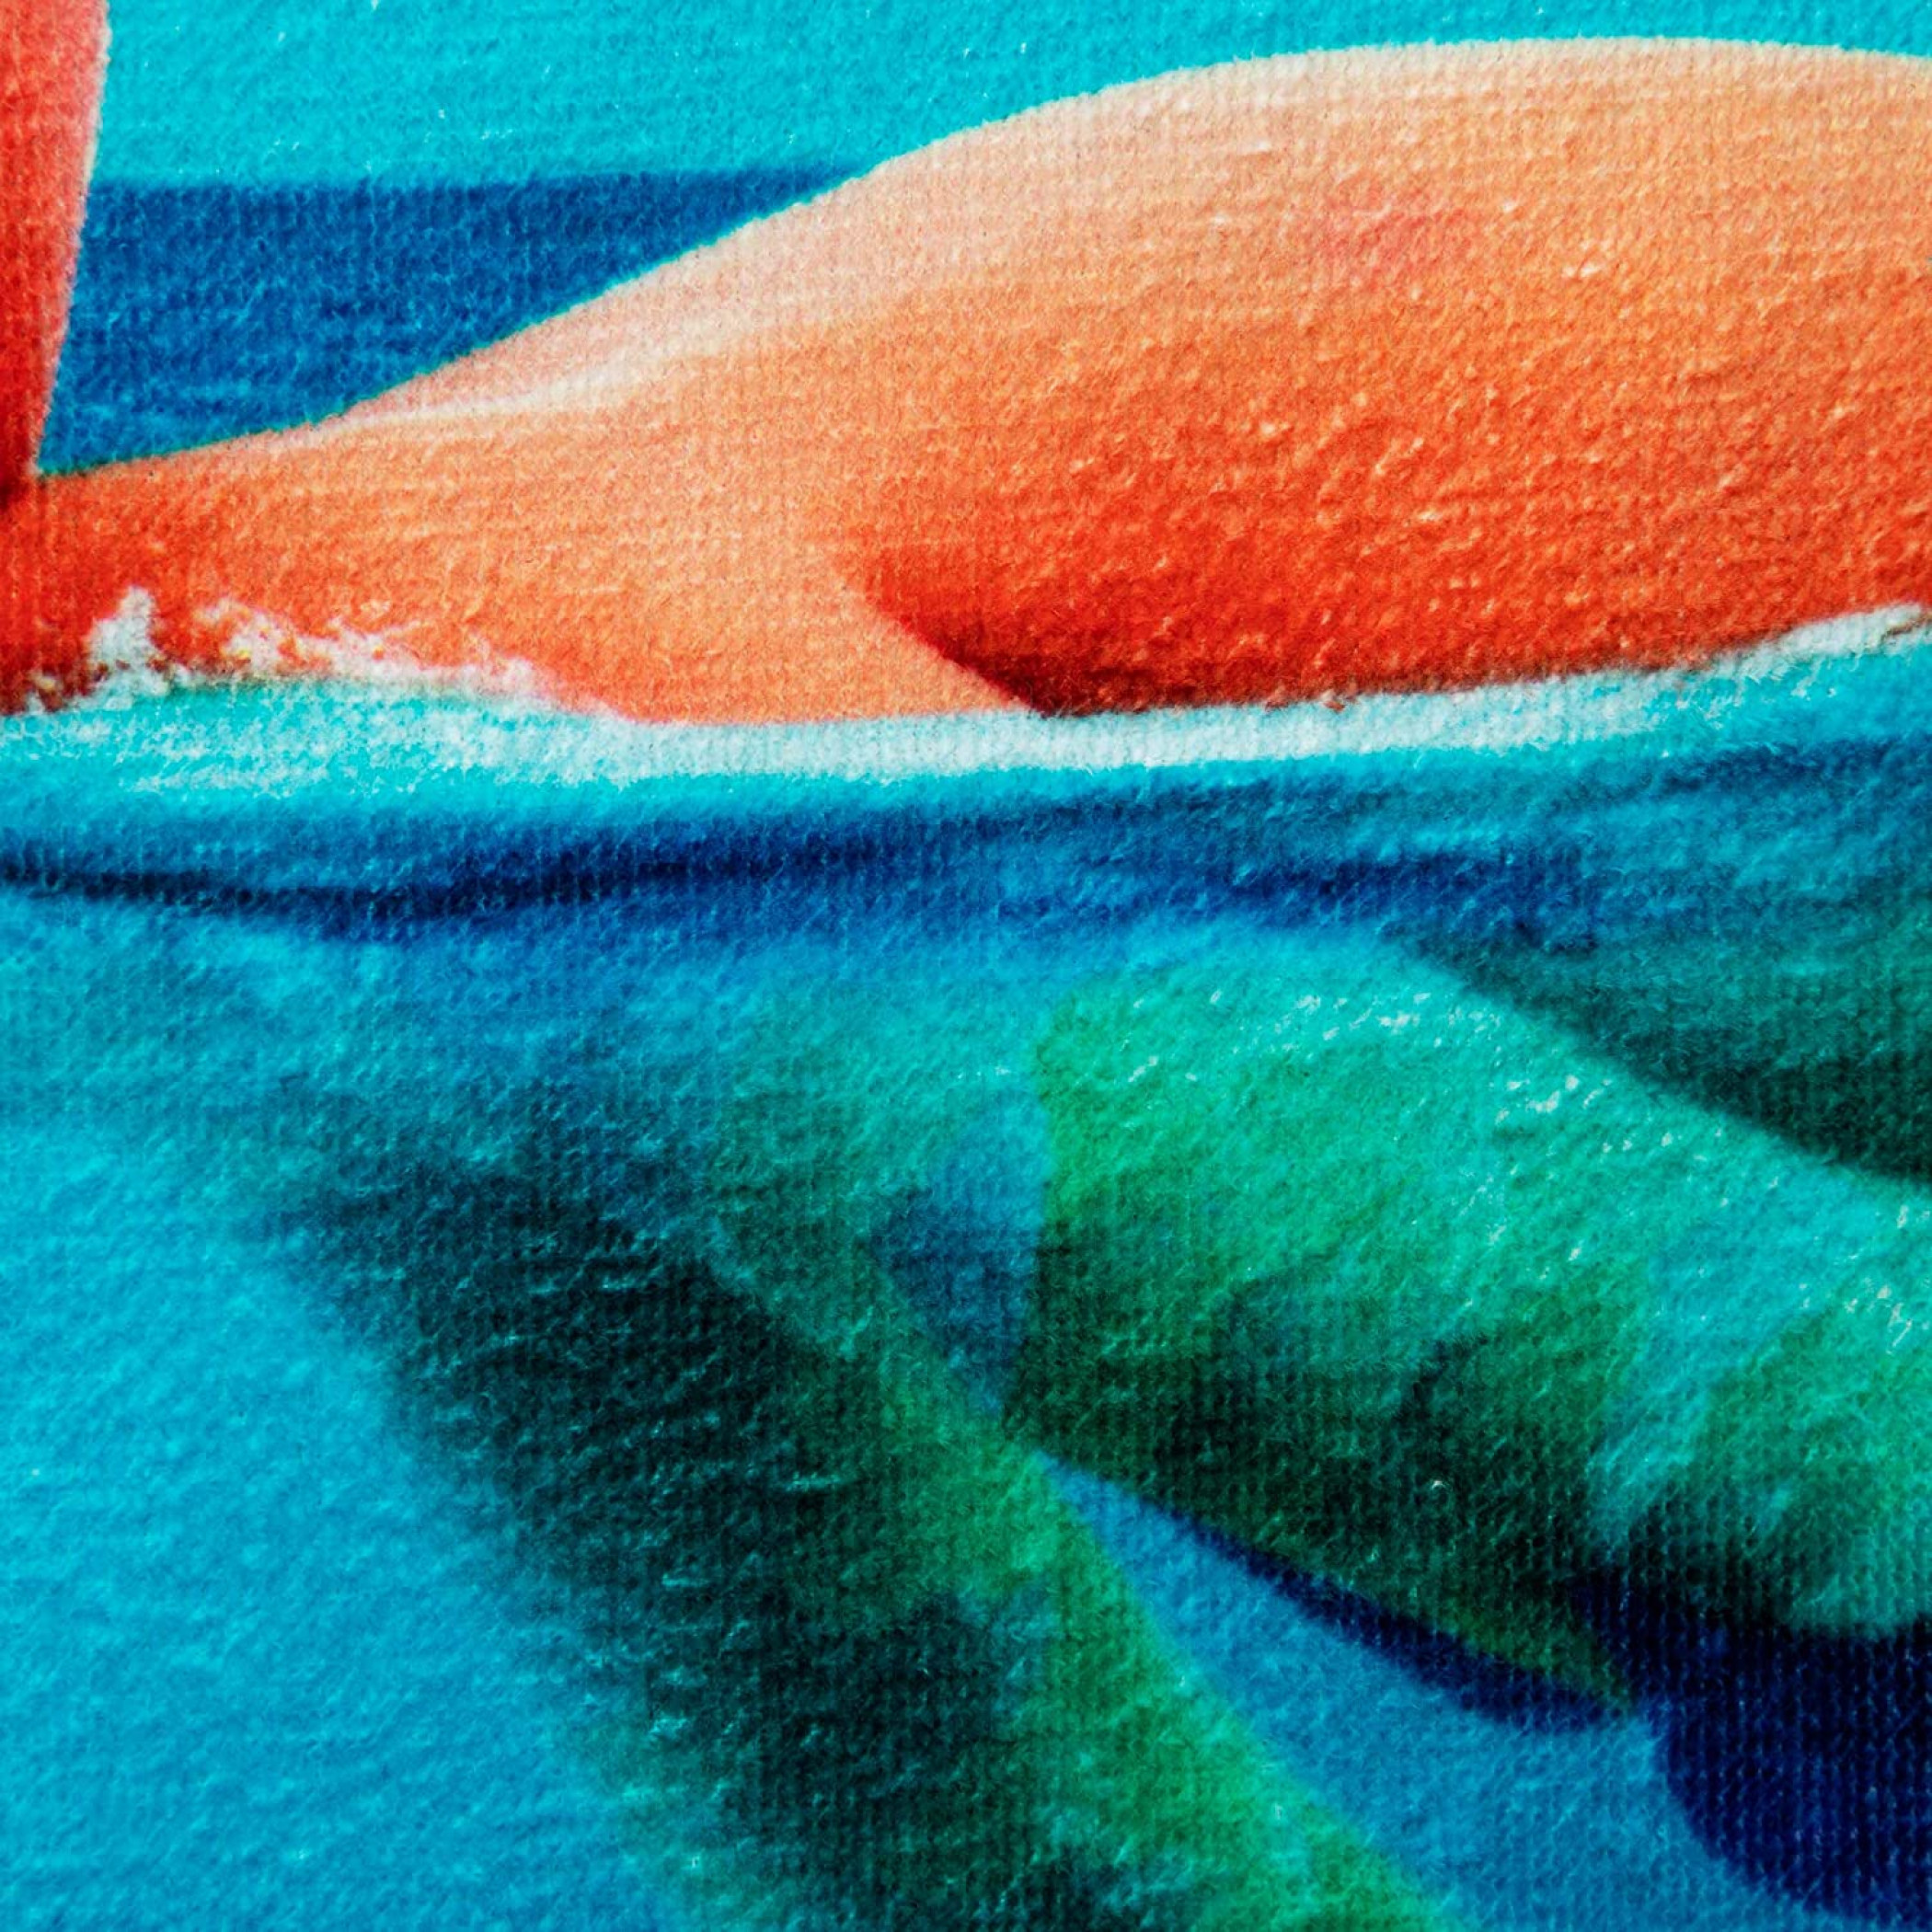 Disney Pixar Luca Floating Oversized Beach Towel